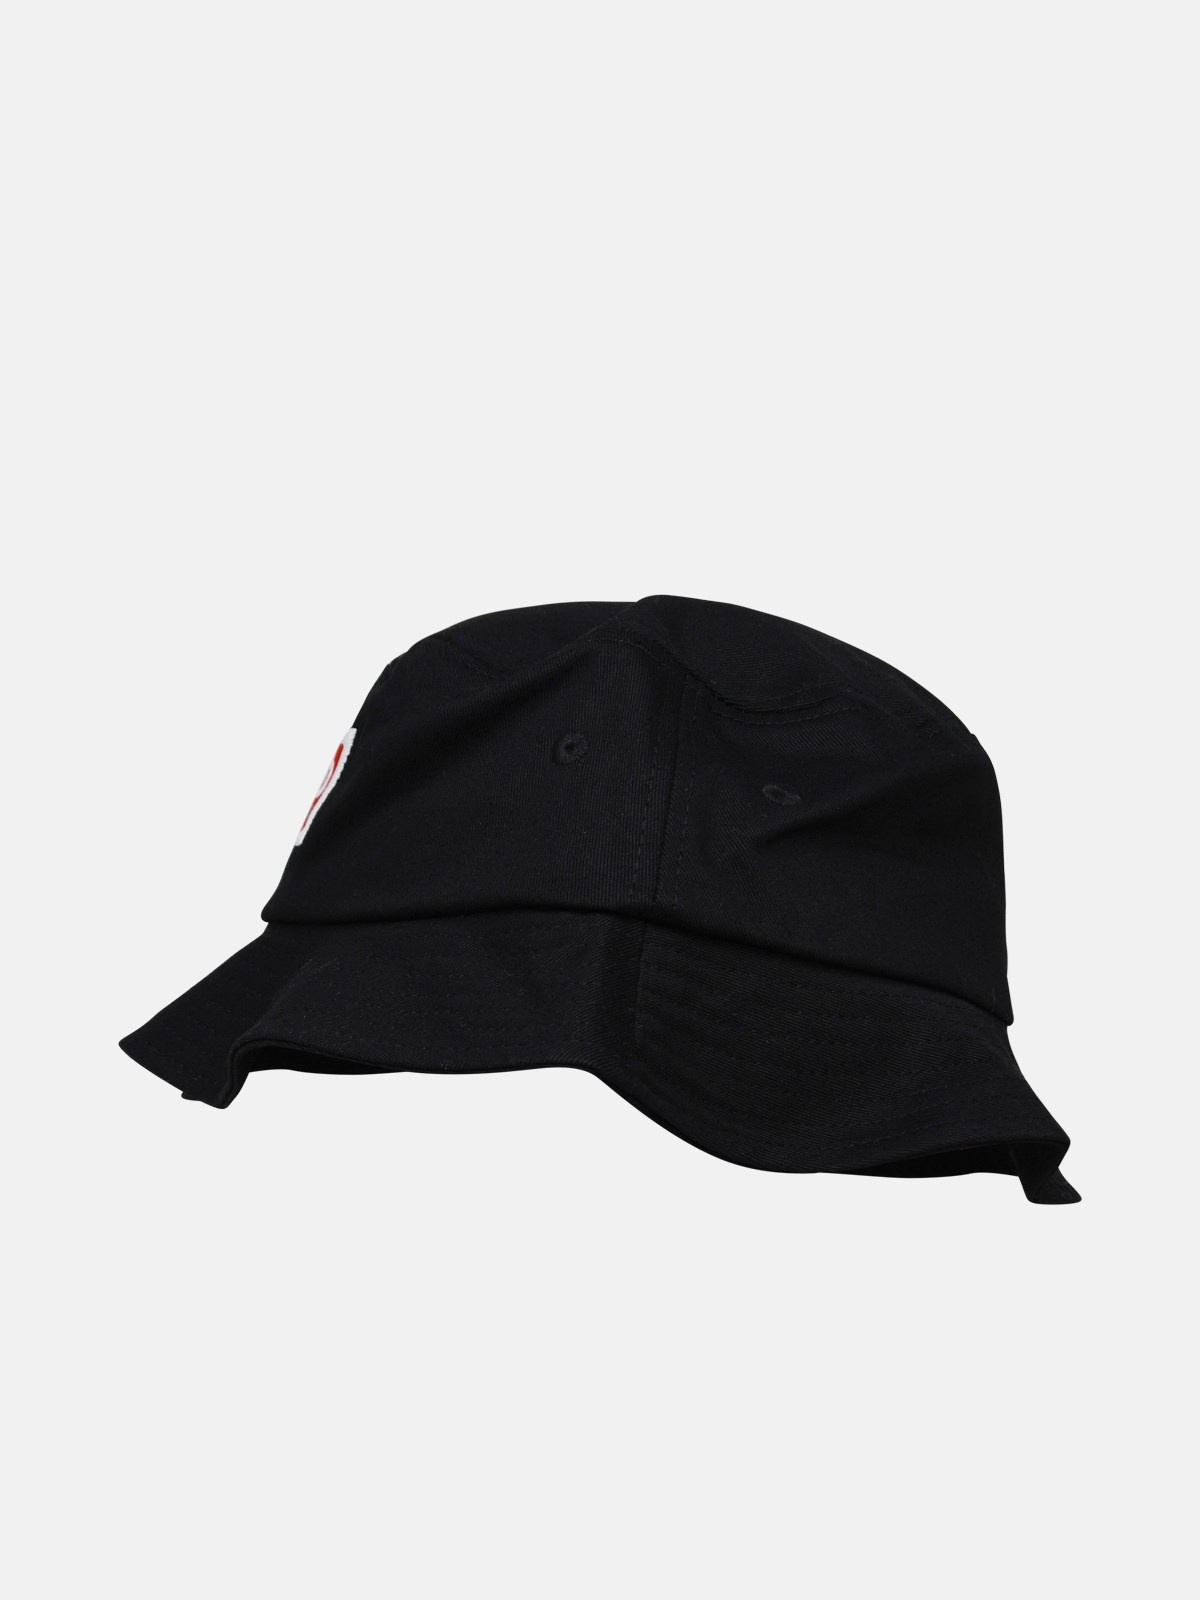 Black canvas hat - 2